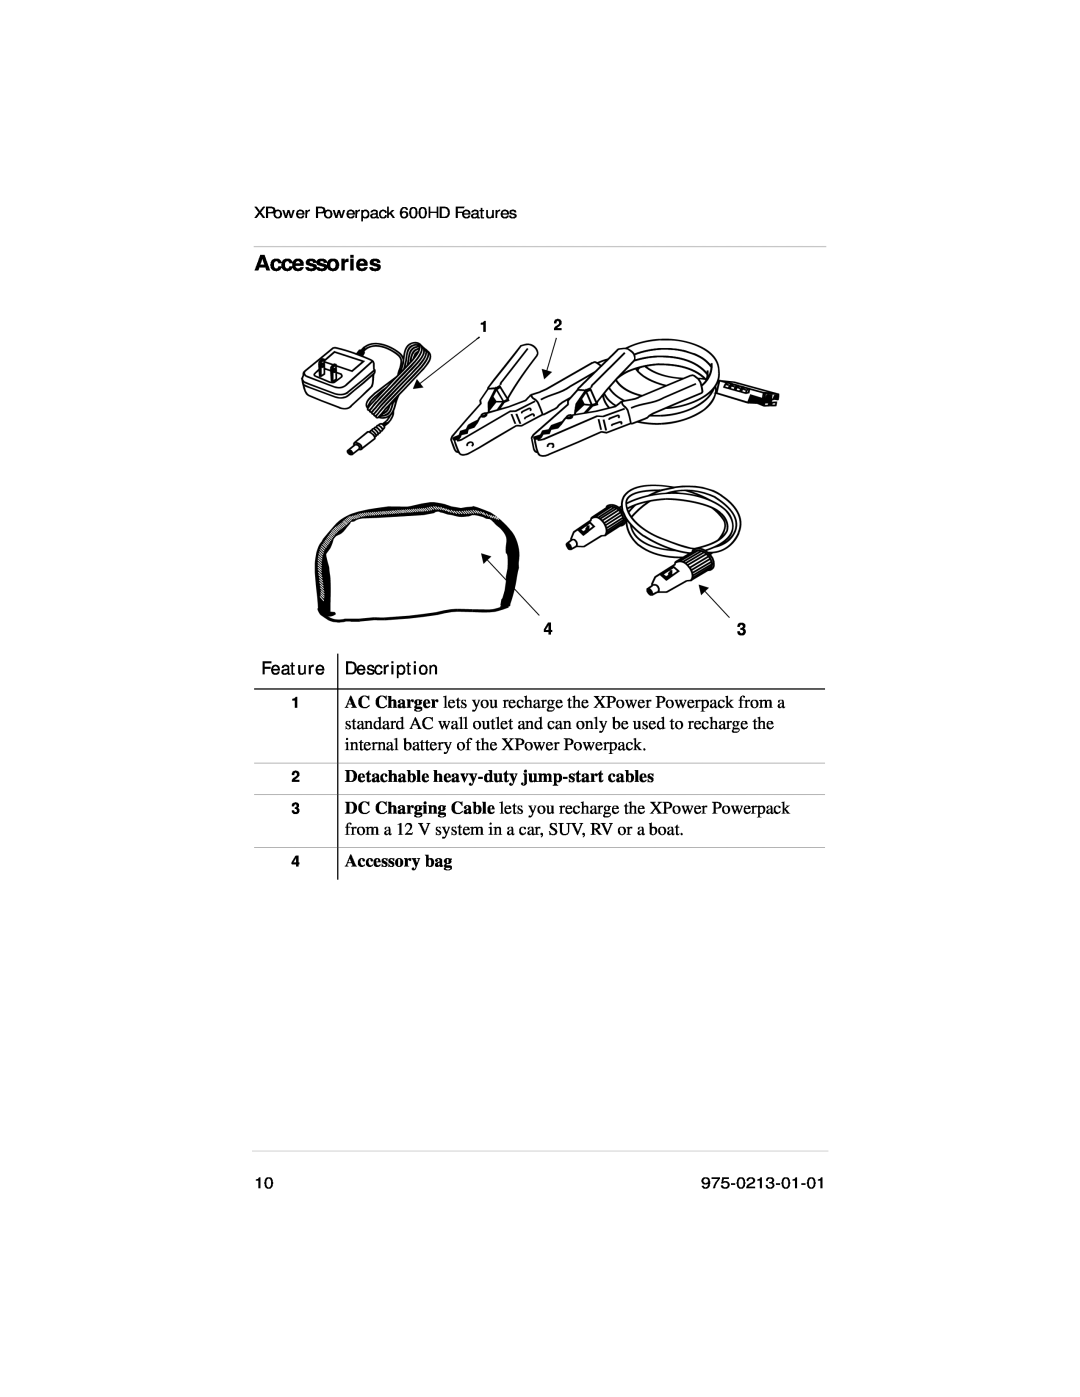 Xantrex Technology 600HD manual Accessories, Feature Description, Detachable heavy-duty jump-start cables, Accessory bag 